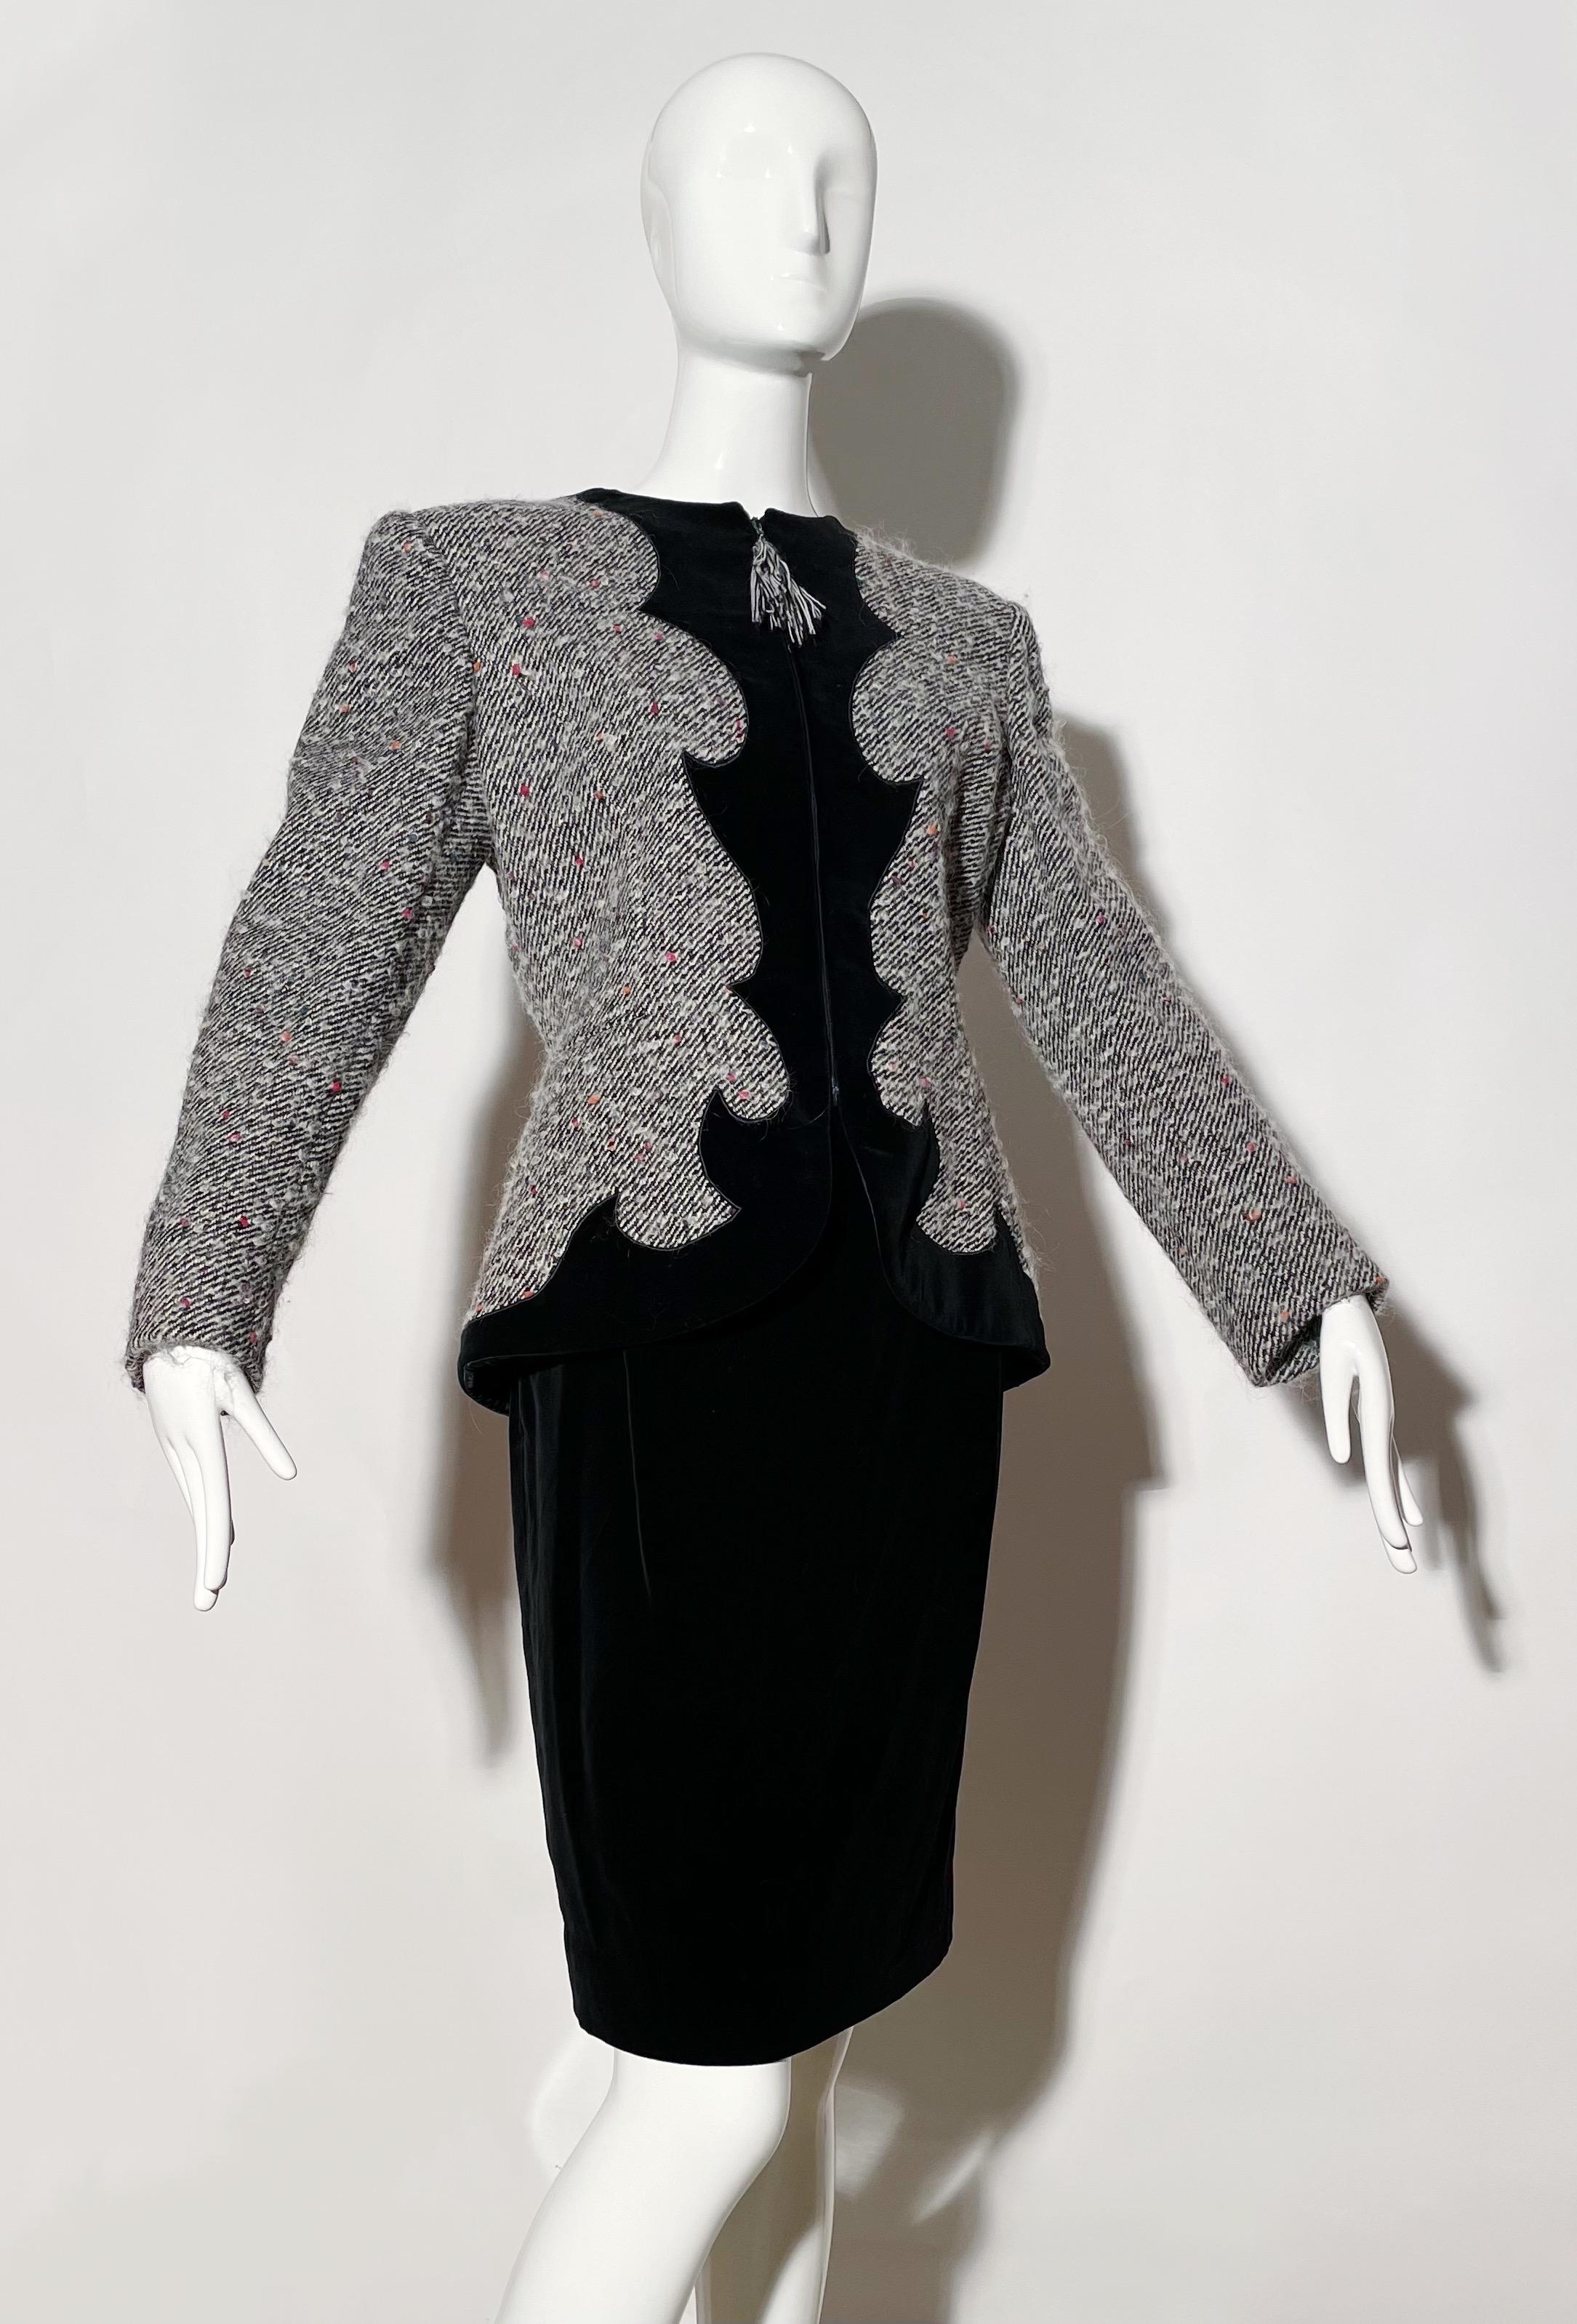 Emanuel Ungaro Tweed Skirt Suit  In Excellent Condition For Sale In Los Angeles, CA